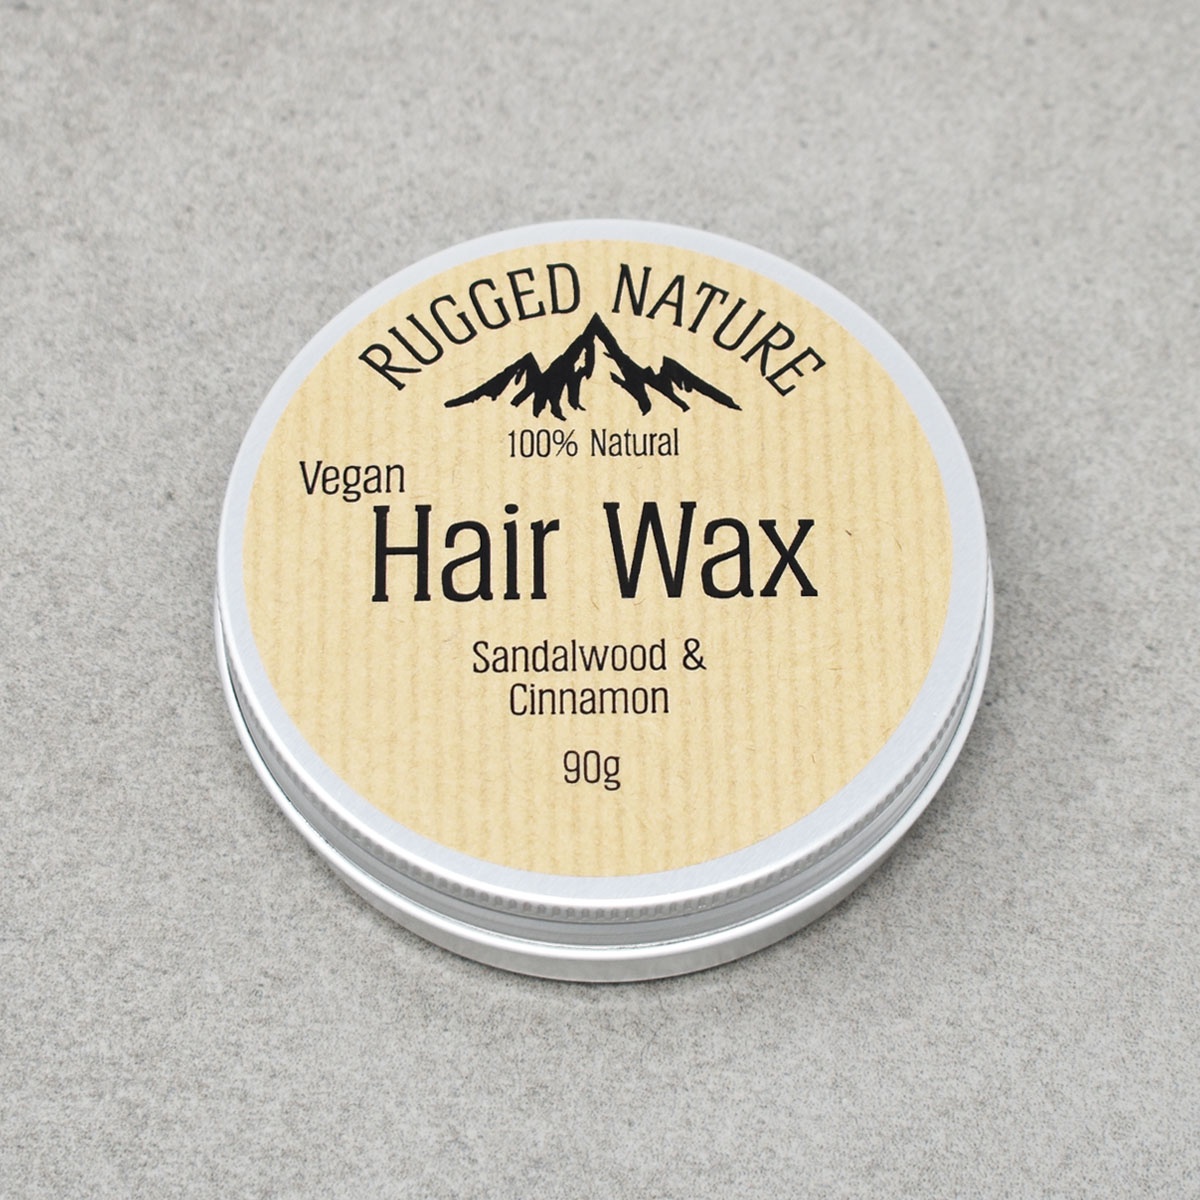 Rugged Nature Natural Vegan Hair Wax - Sandalwood & Cinnamon